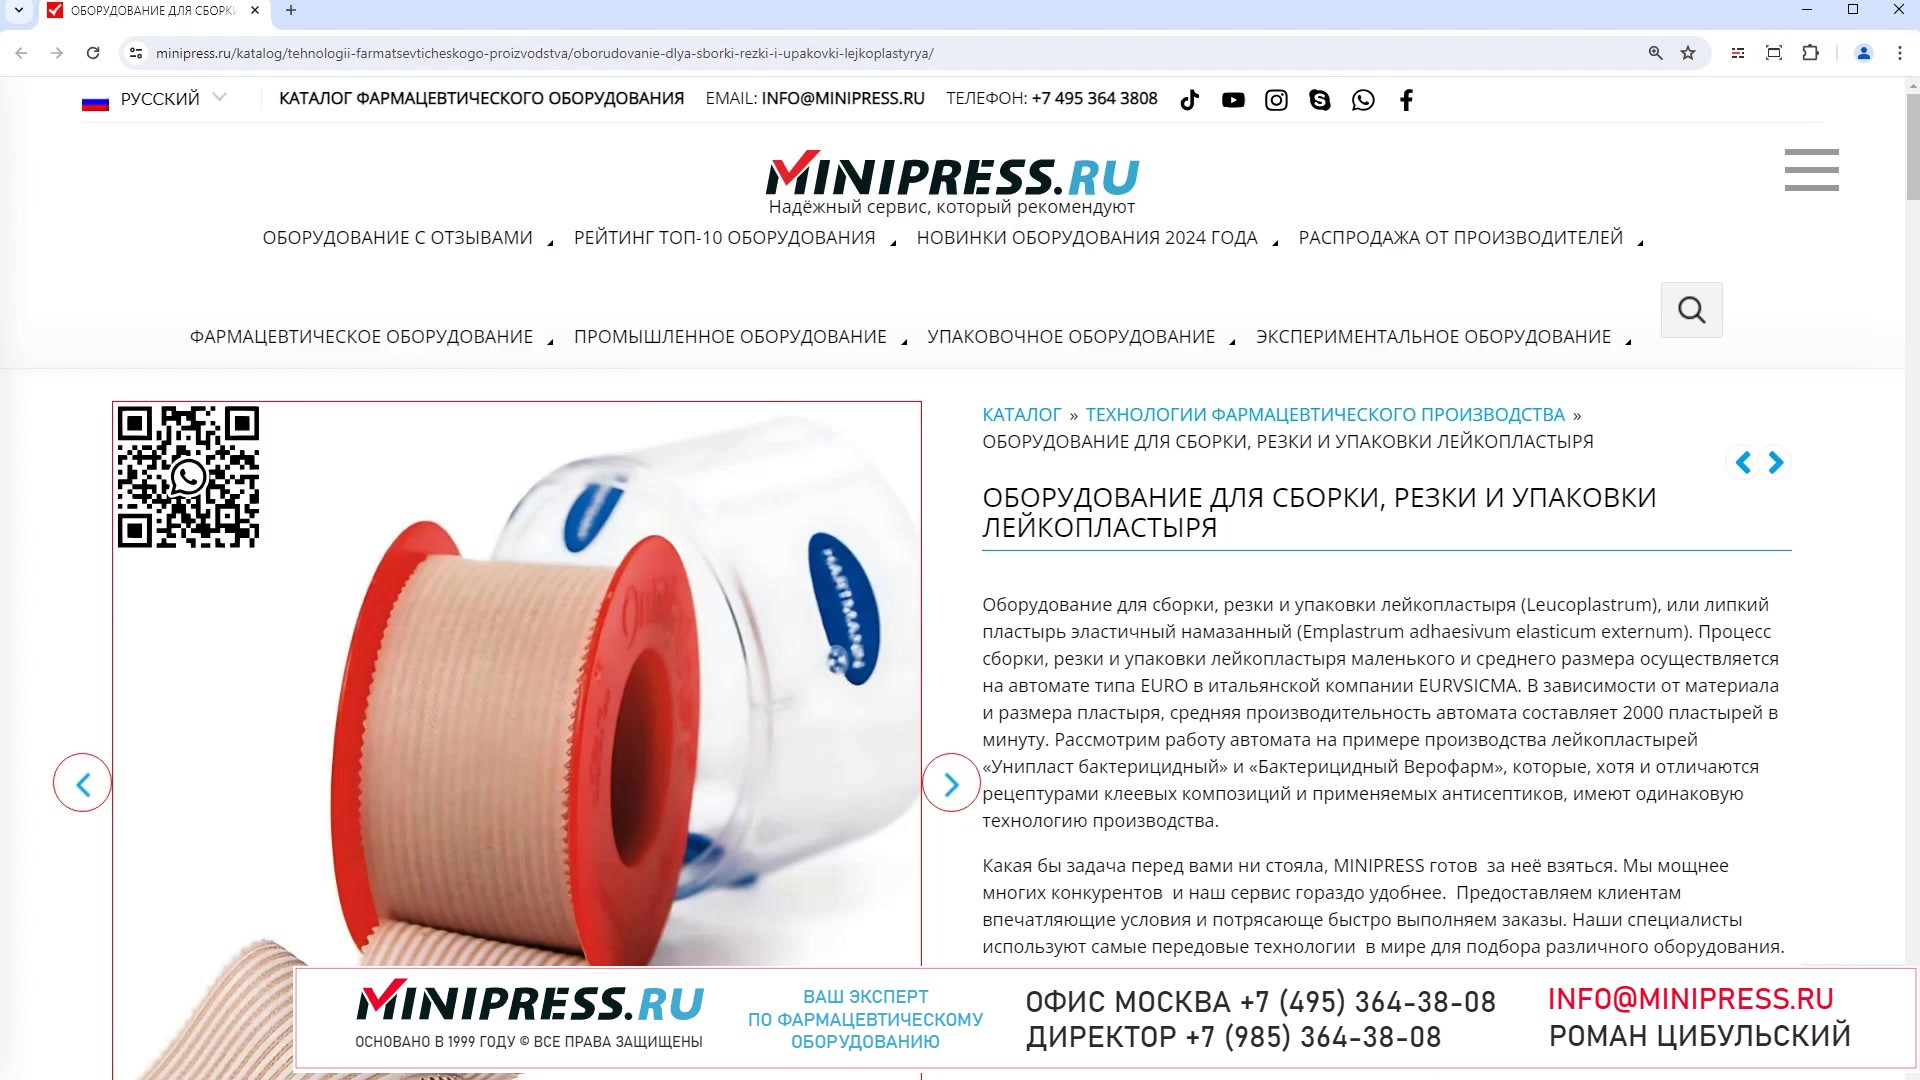 Minipress.ru Оборудование для сборки, резки и упаковки лейкопластыря